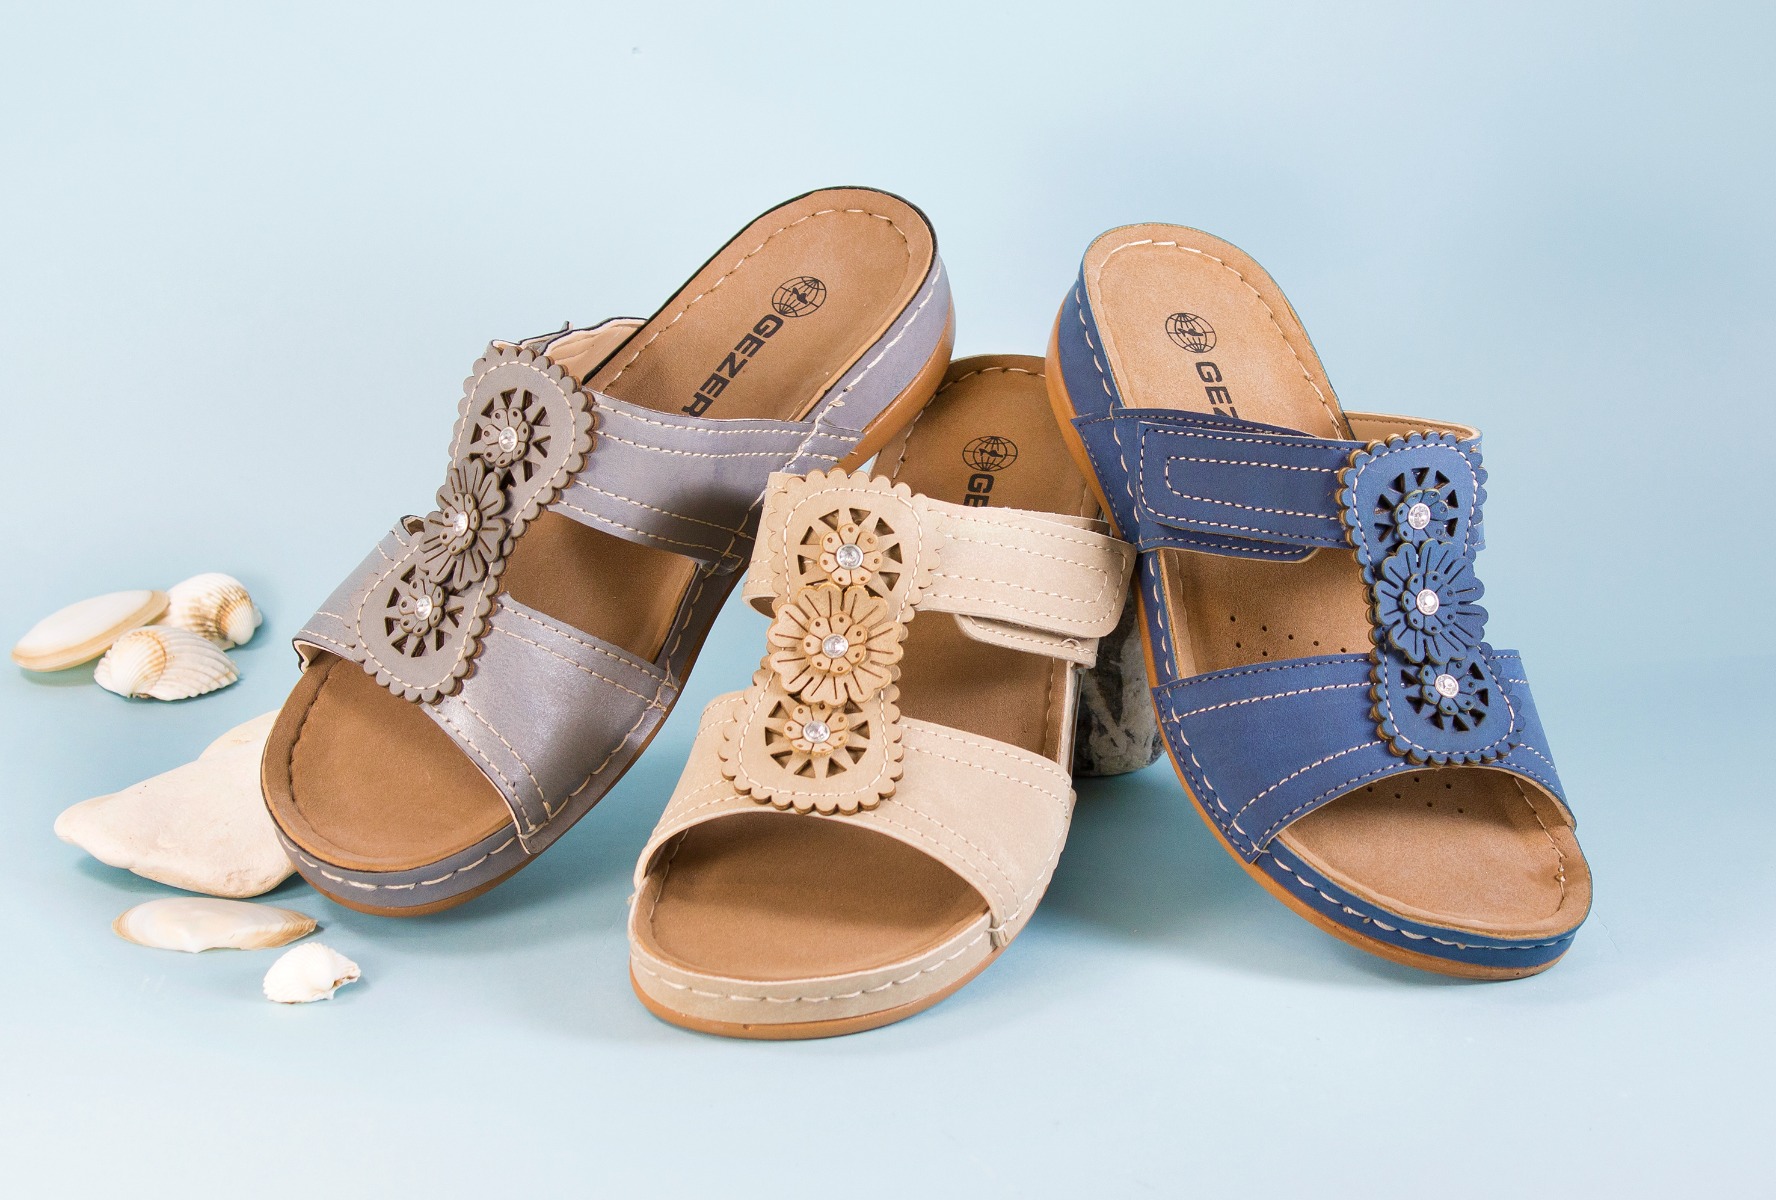 Three pairs of slip on sandals.